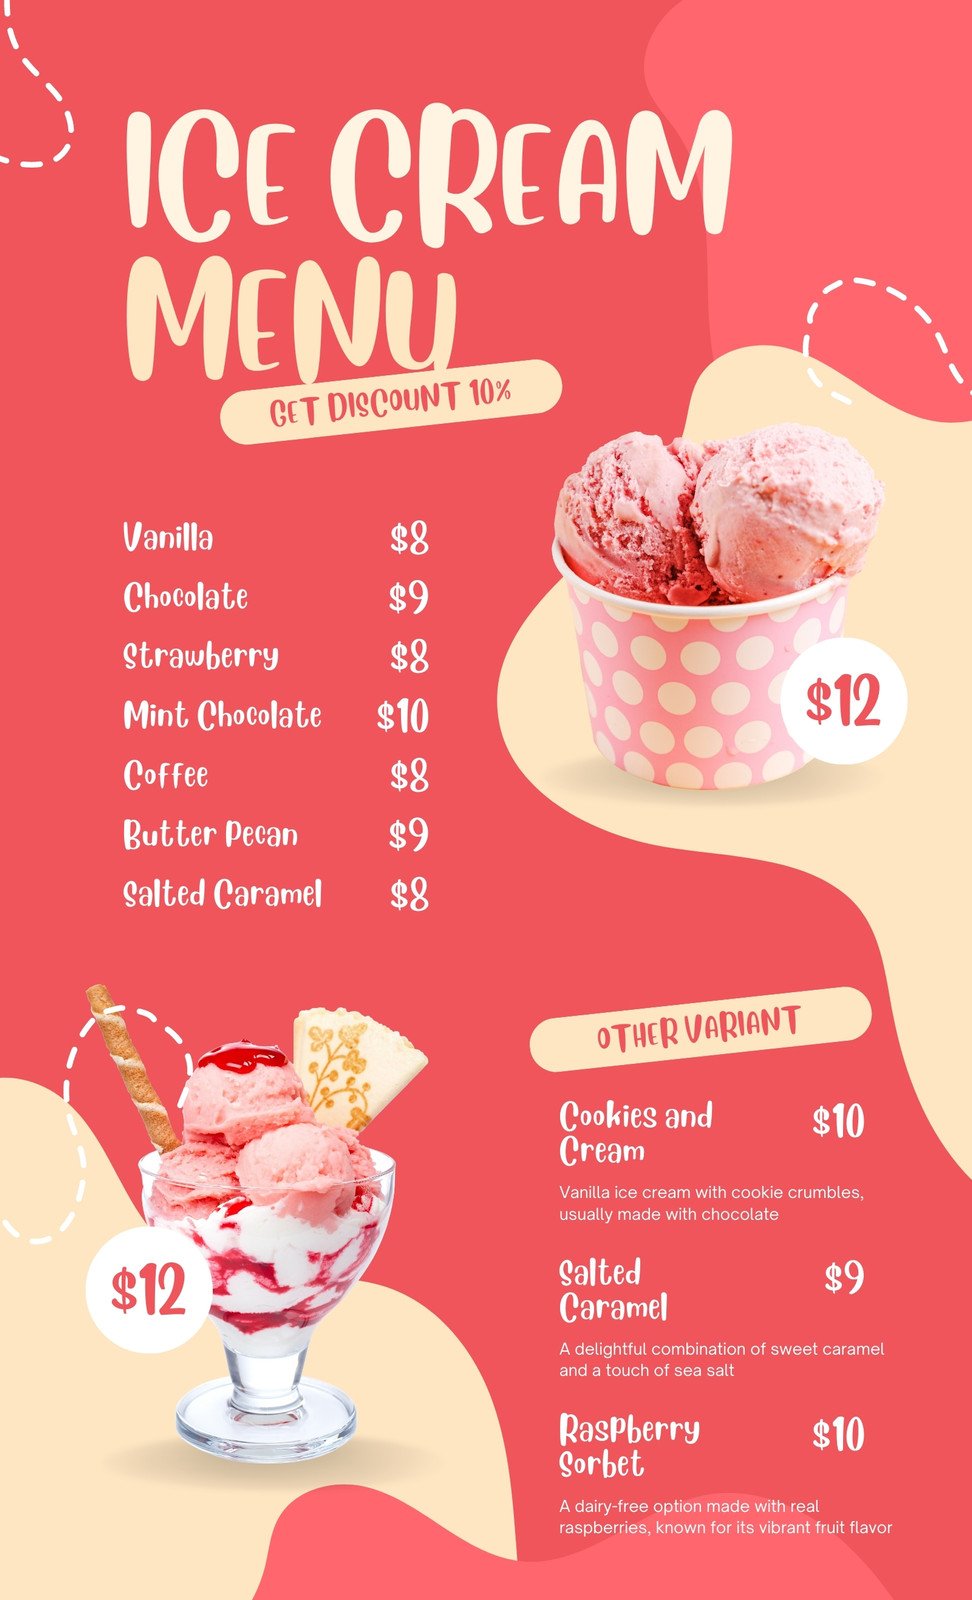 https://marketplace.canva.com/EAFnt6ikeeY/1/0/972w/canva-pink-yellow-playful-ice-cream-menu-Wr2qbb4mGvQ.jpg